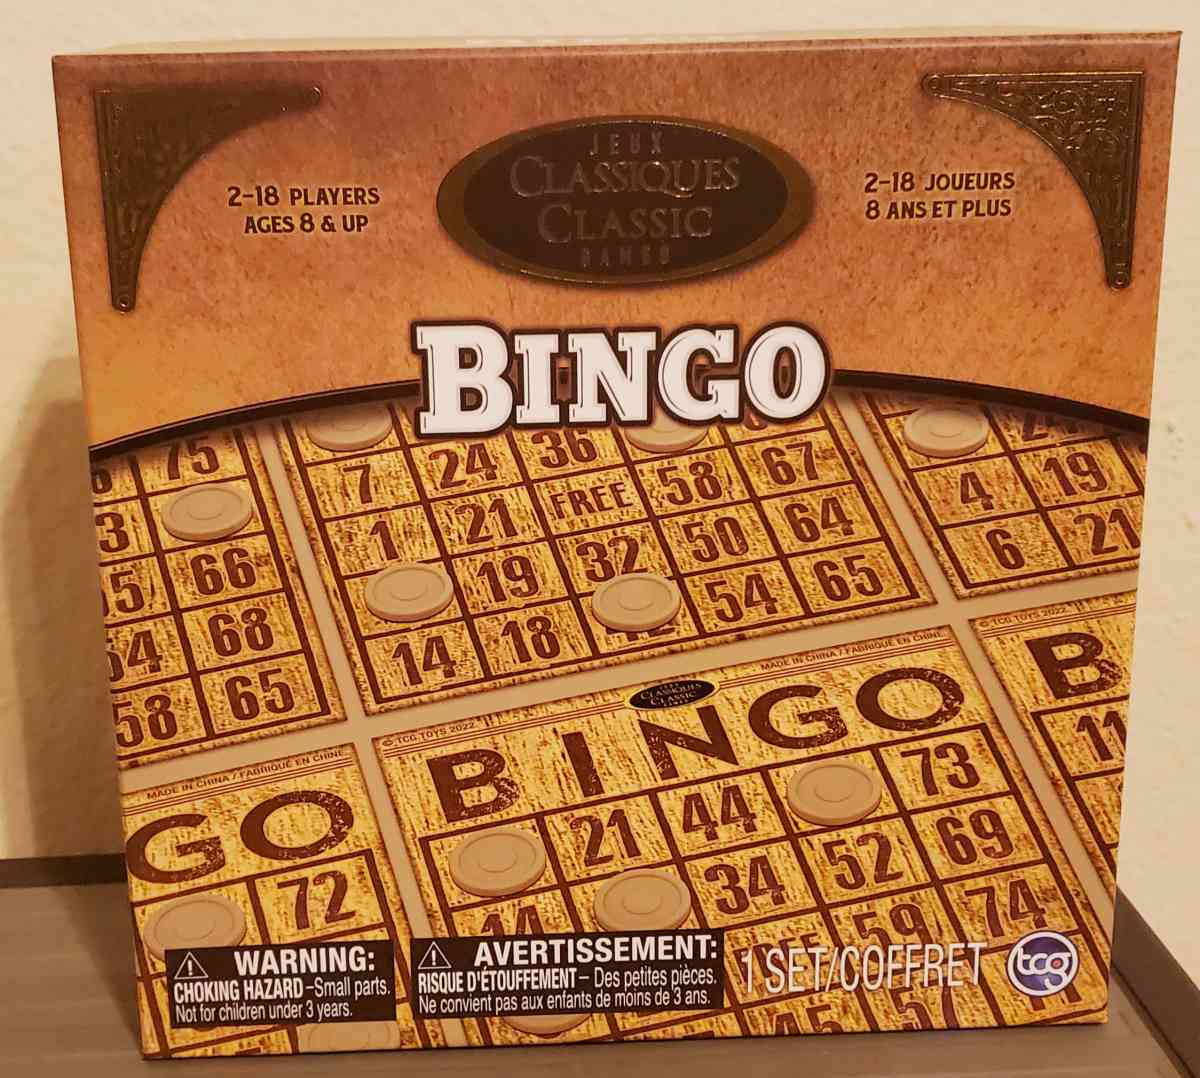 New Bingo game